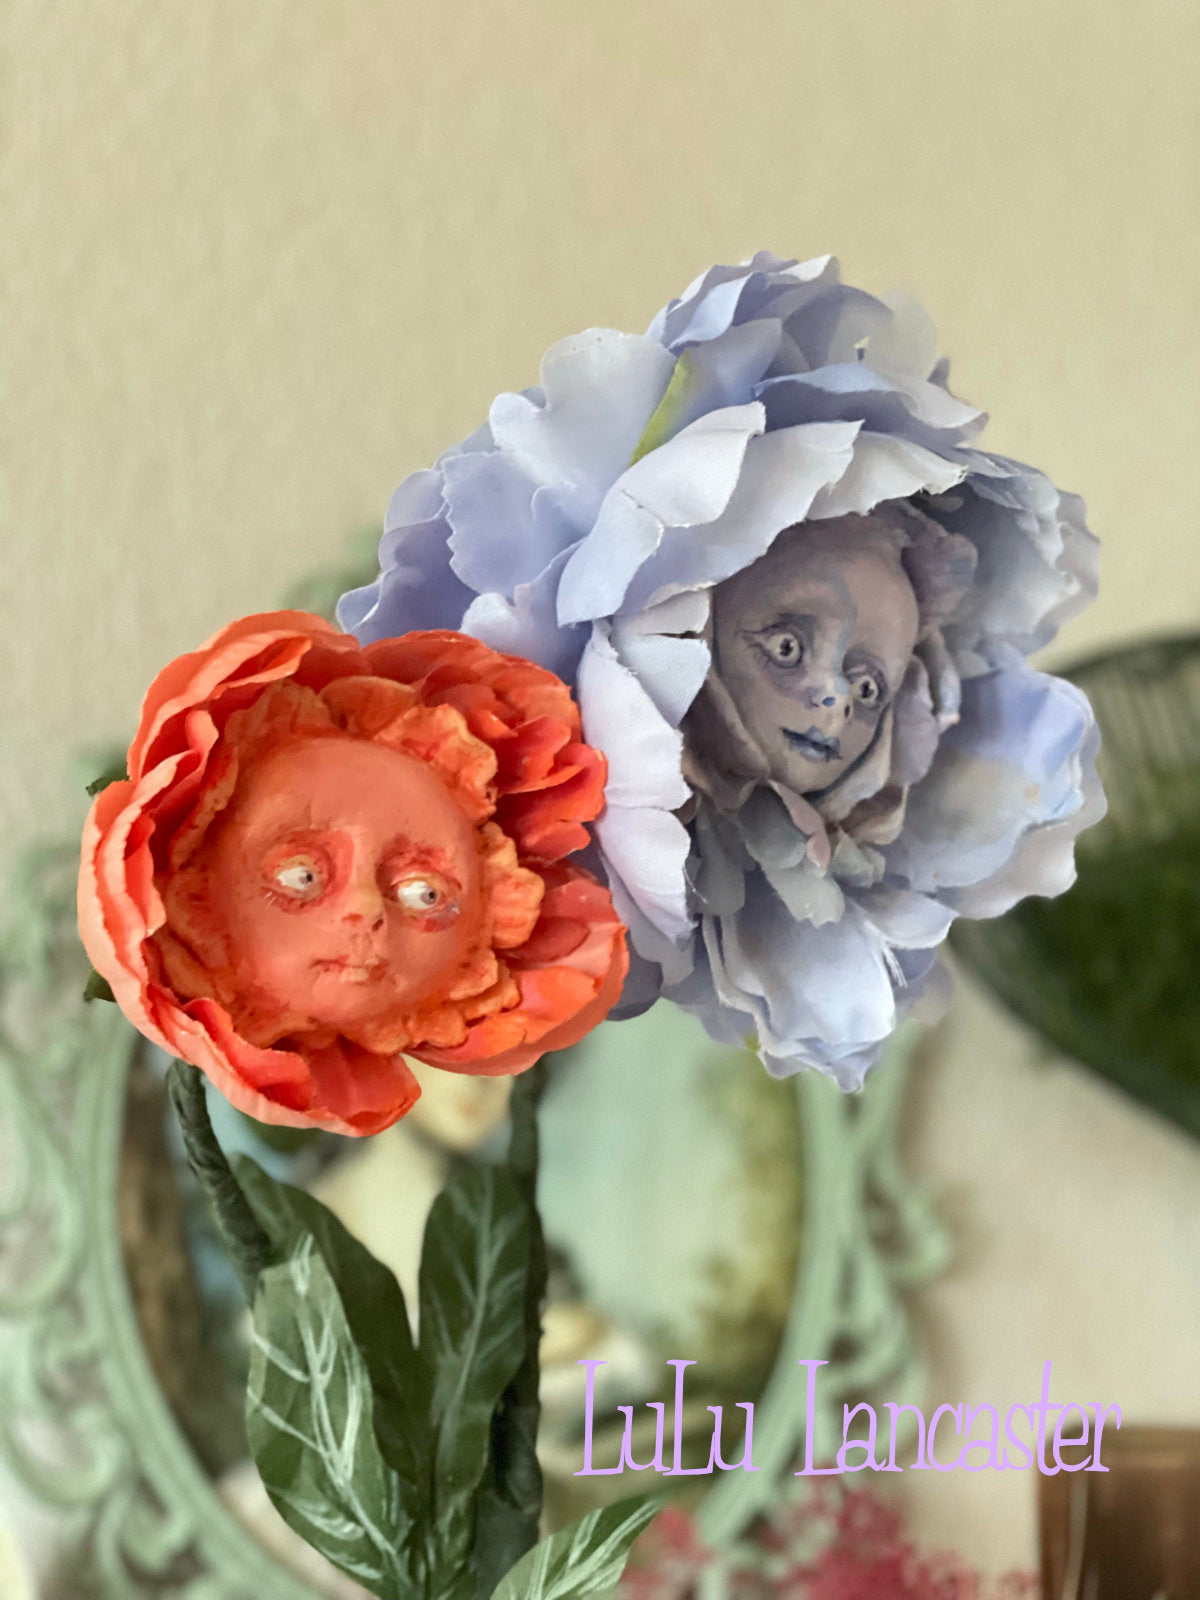 Peony Flowers in LuLu's Wonderland Original LuLu Lancaster Art Doll